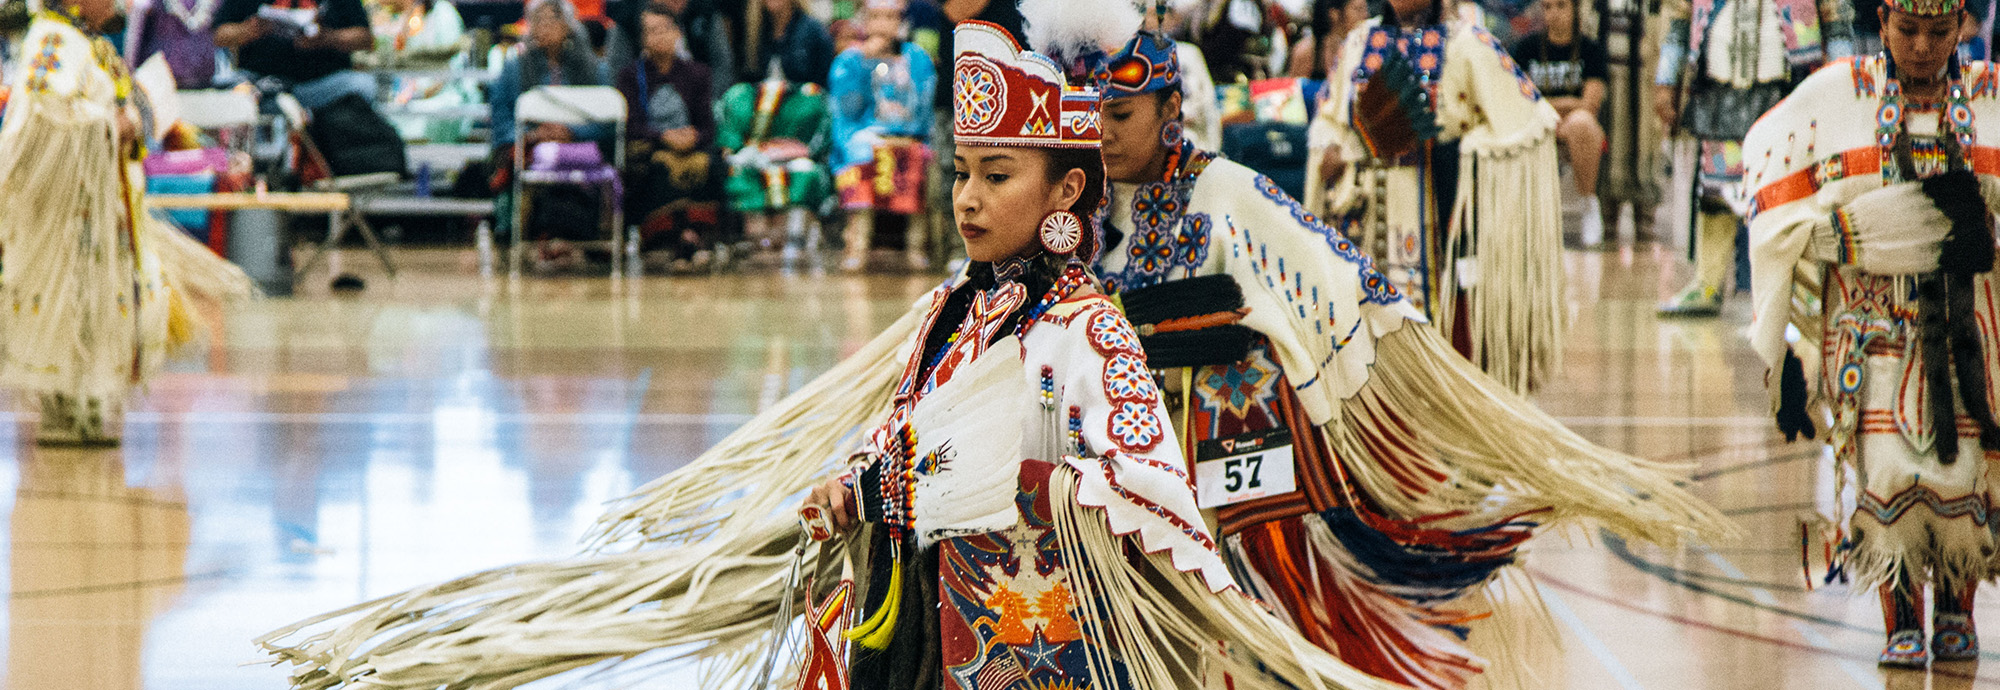 Indigenous person dancing